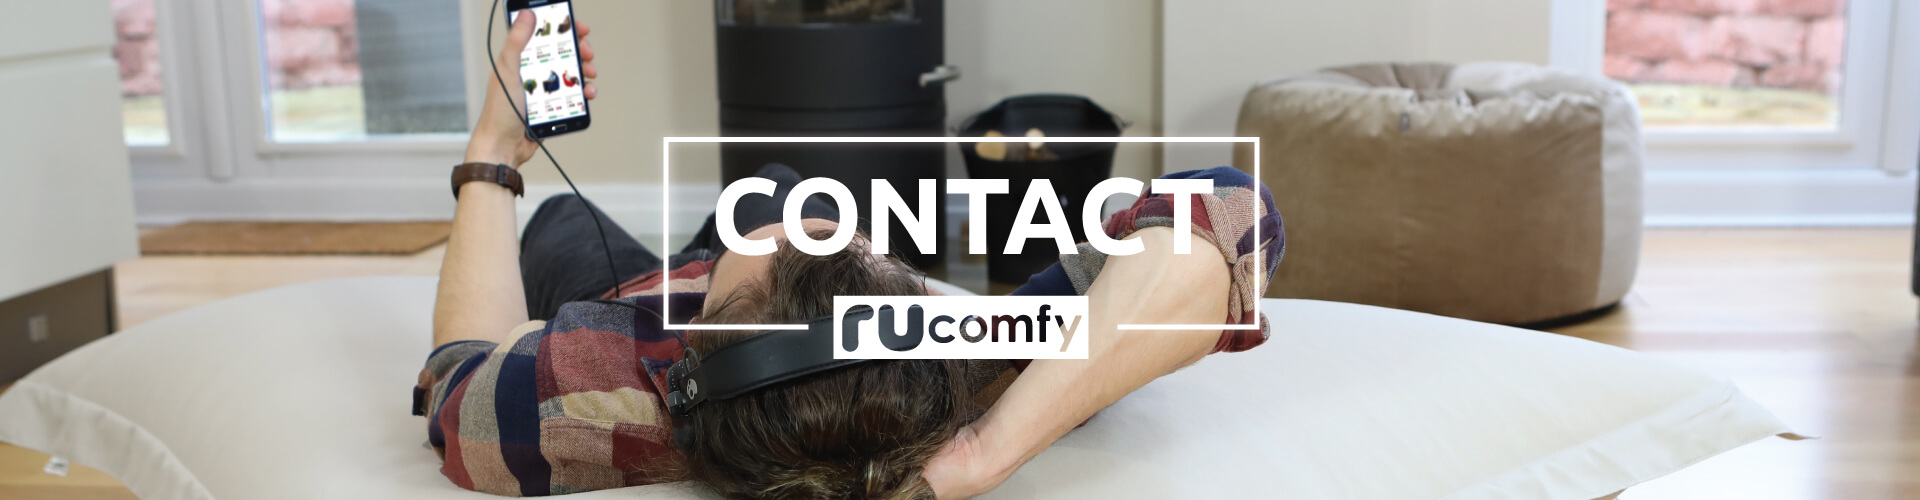 Contact rucomfy